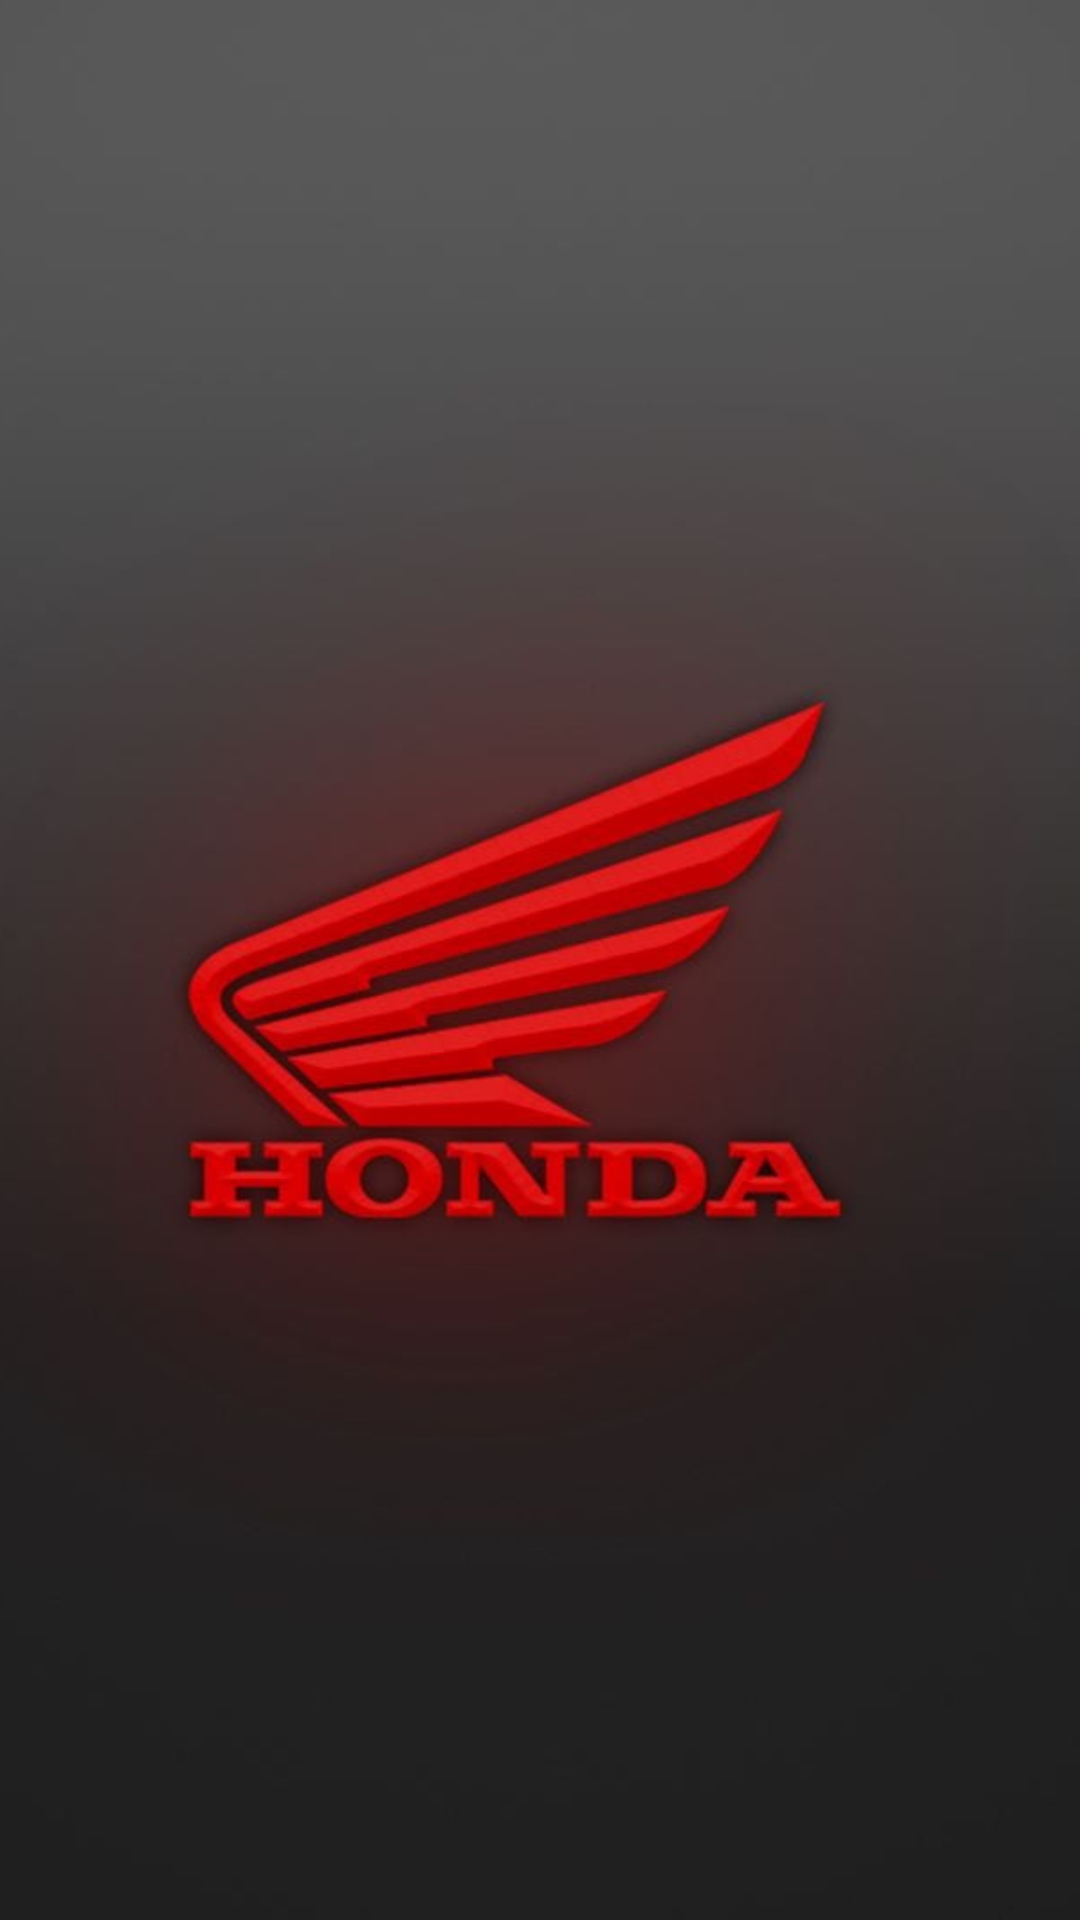 Honda Logo Wallpaper Pictures